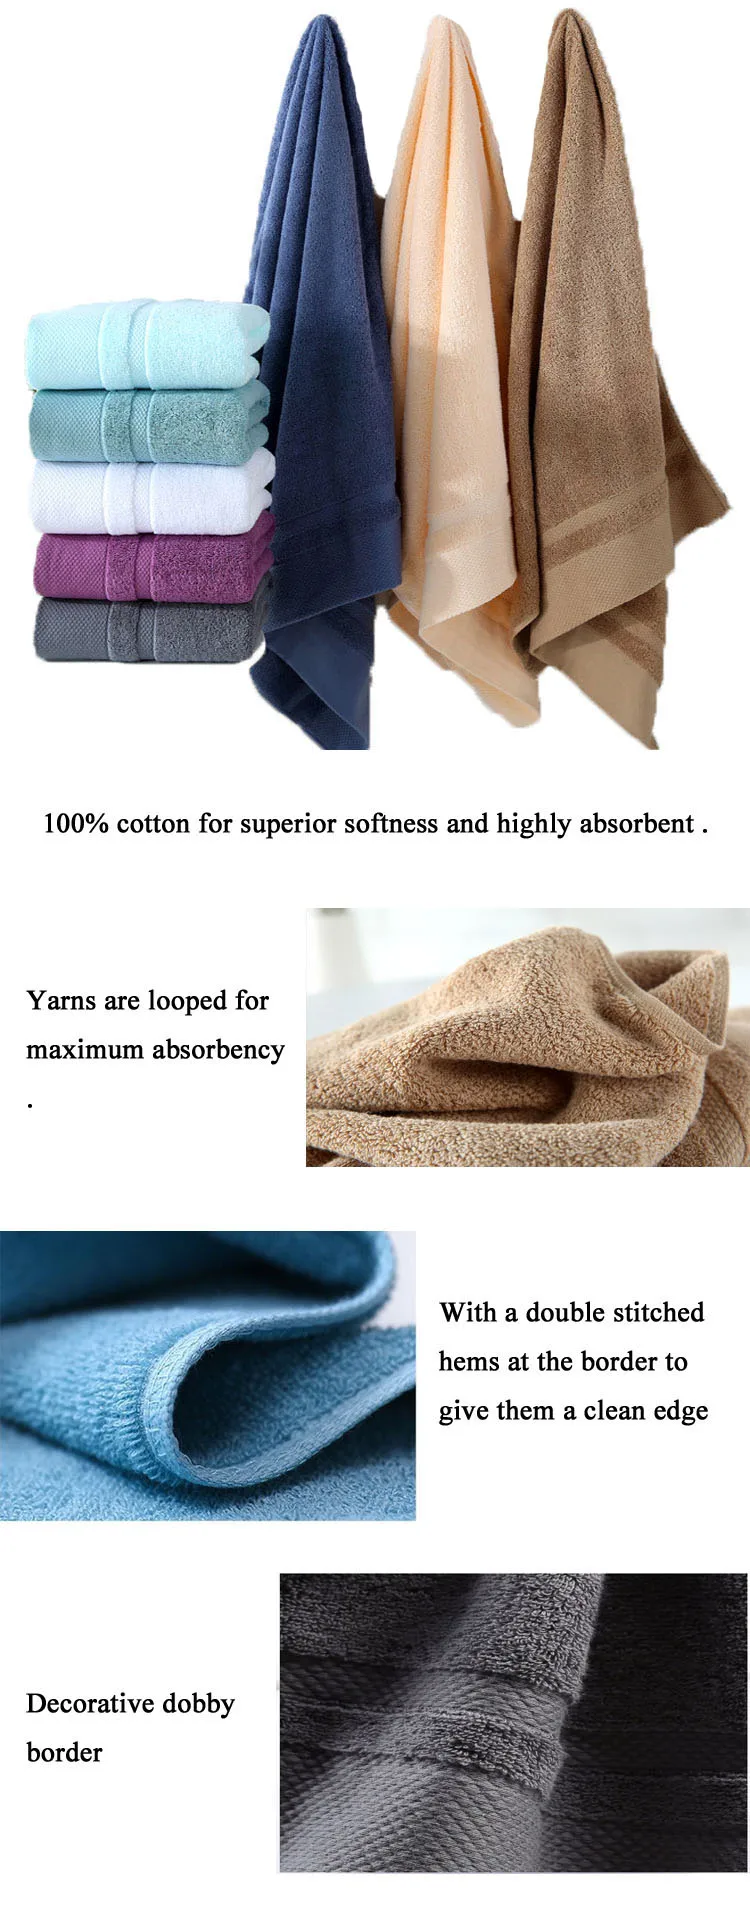 100% cotton towel set white five star hotel bath towel